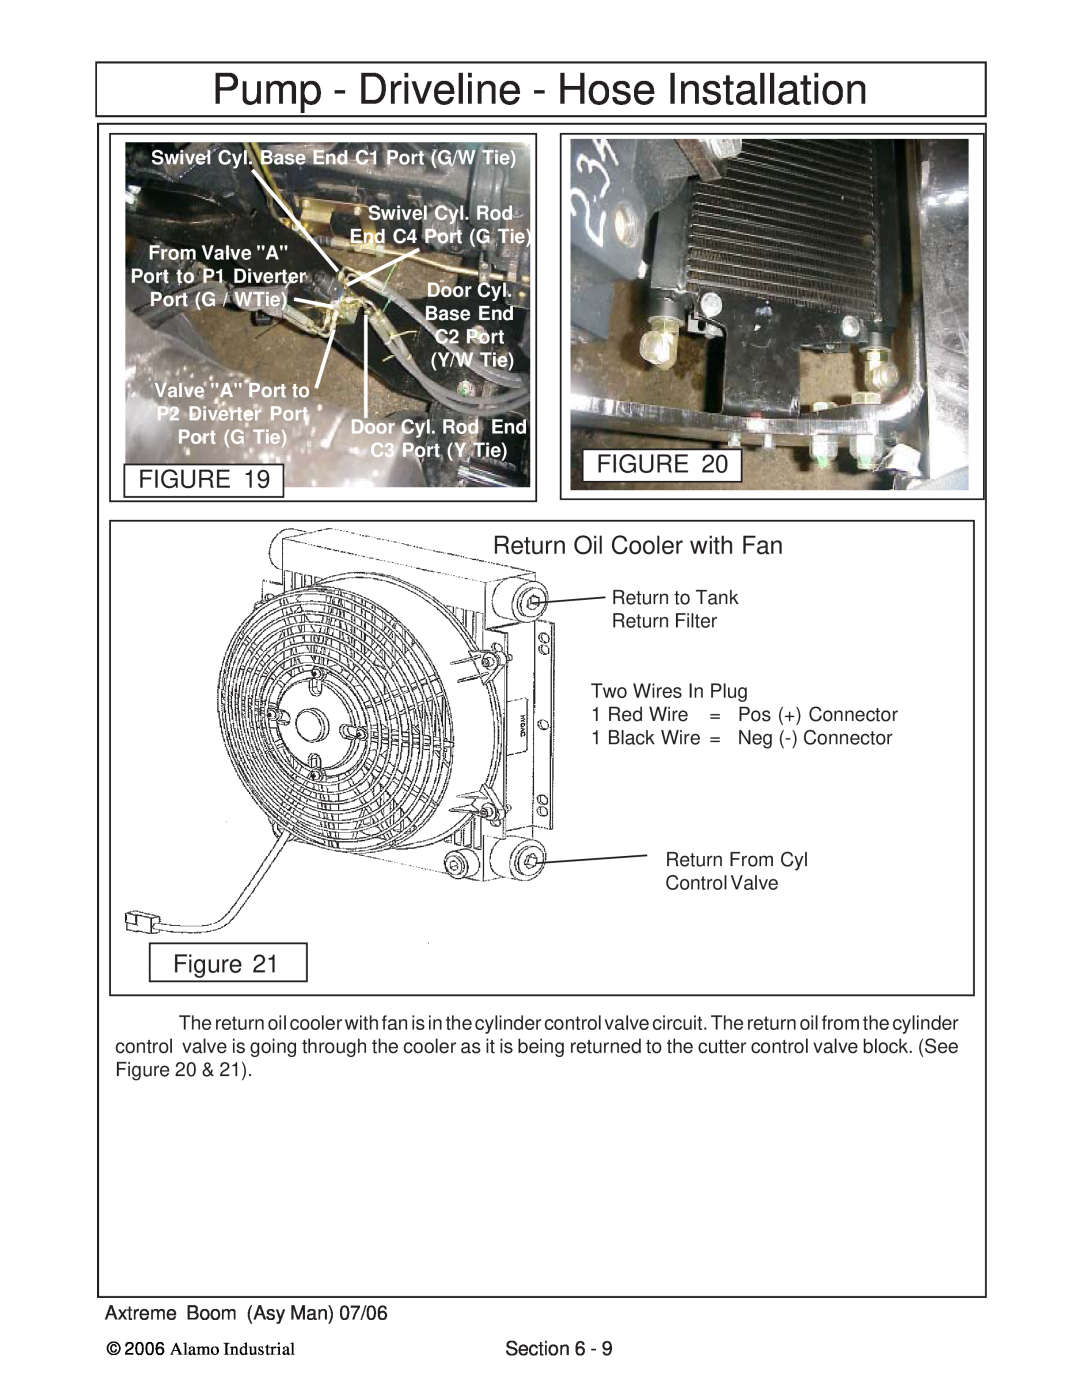 Alamo 02984405 instruction manual Pump - Driveline - Hose Installation, Return Oil Cooler with Fan 